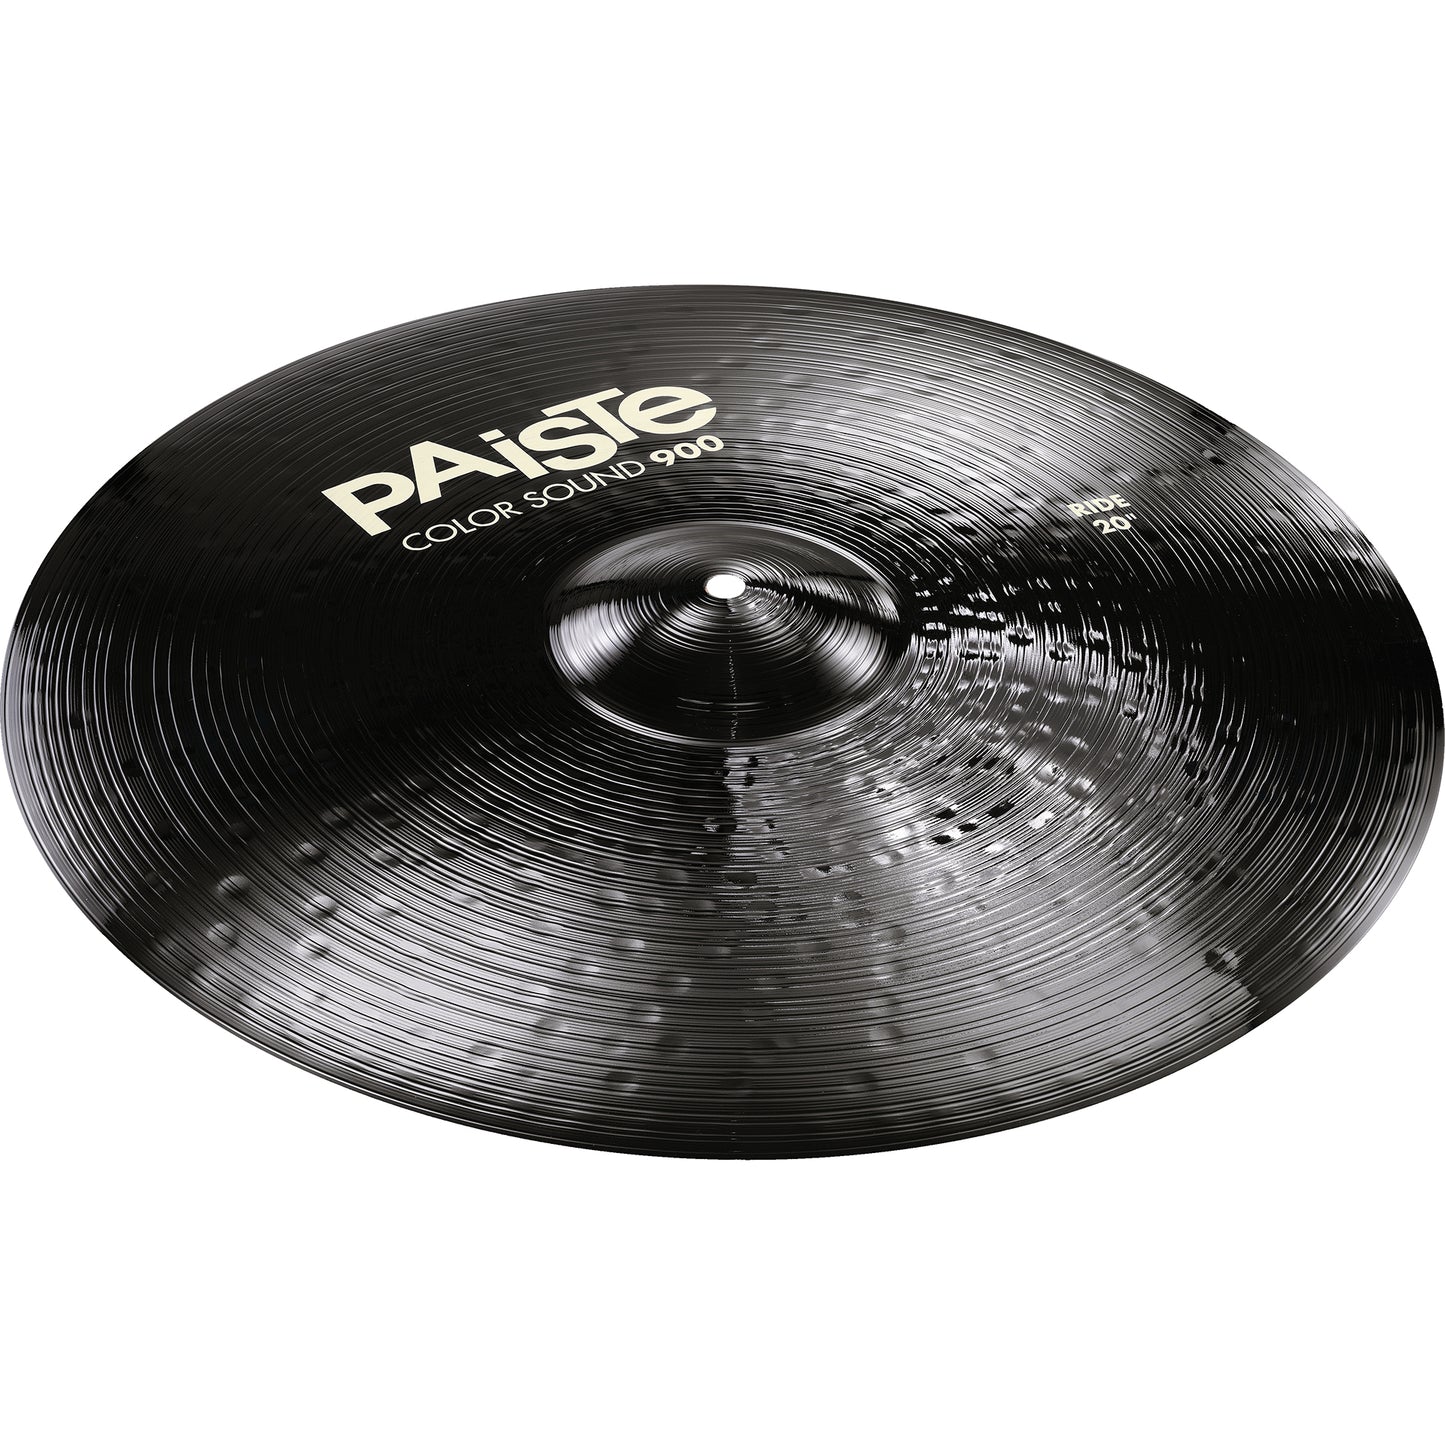 Paiste 20” Color Sound 900 Black Ride Cymbal